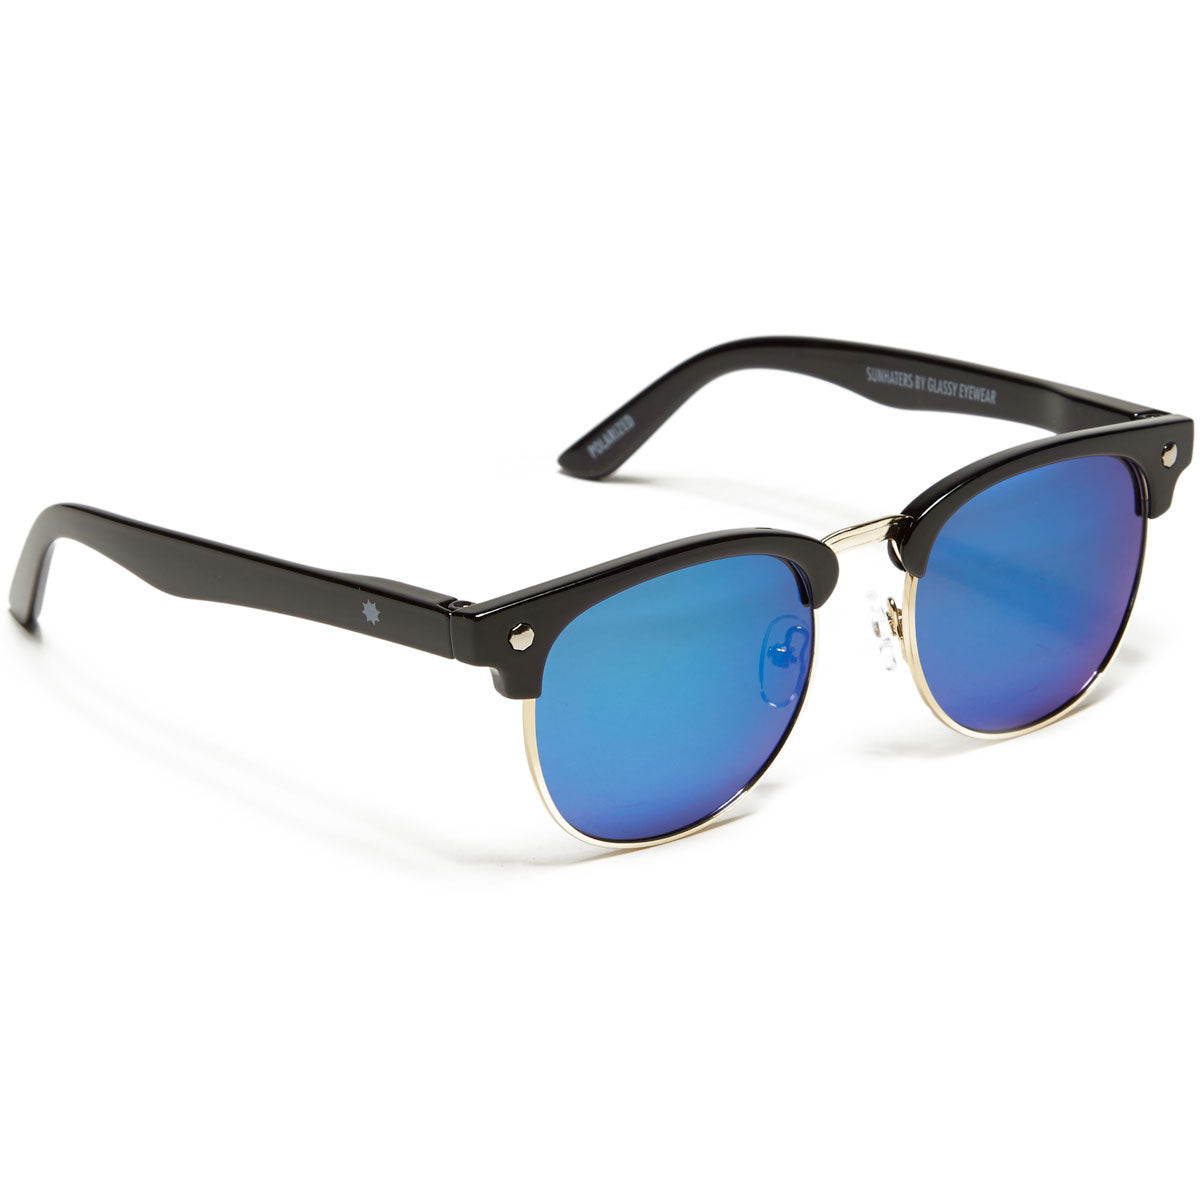 Glassy Morrison Polarized Sunglasses - Black/Blue image 1